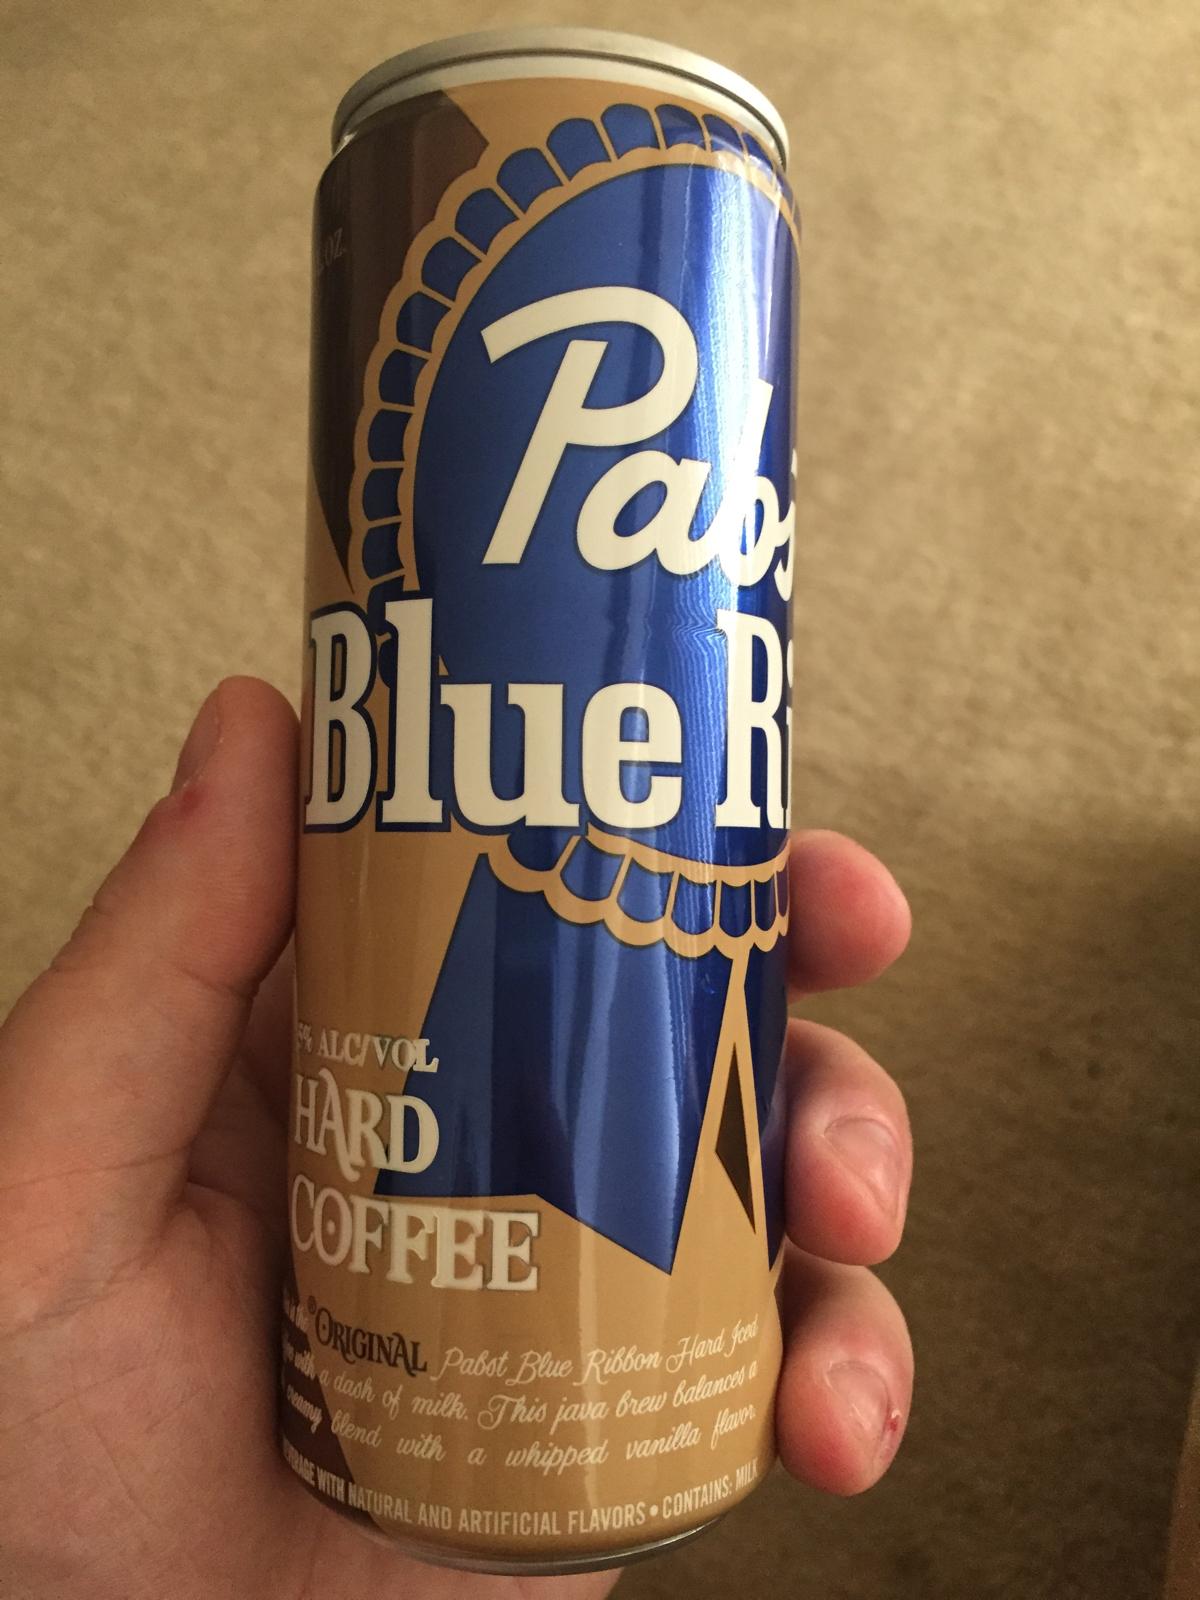 Pabst Blue Ribbon Hard Coffee